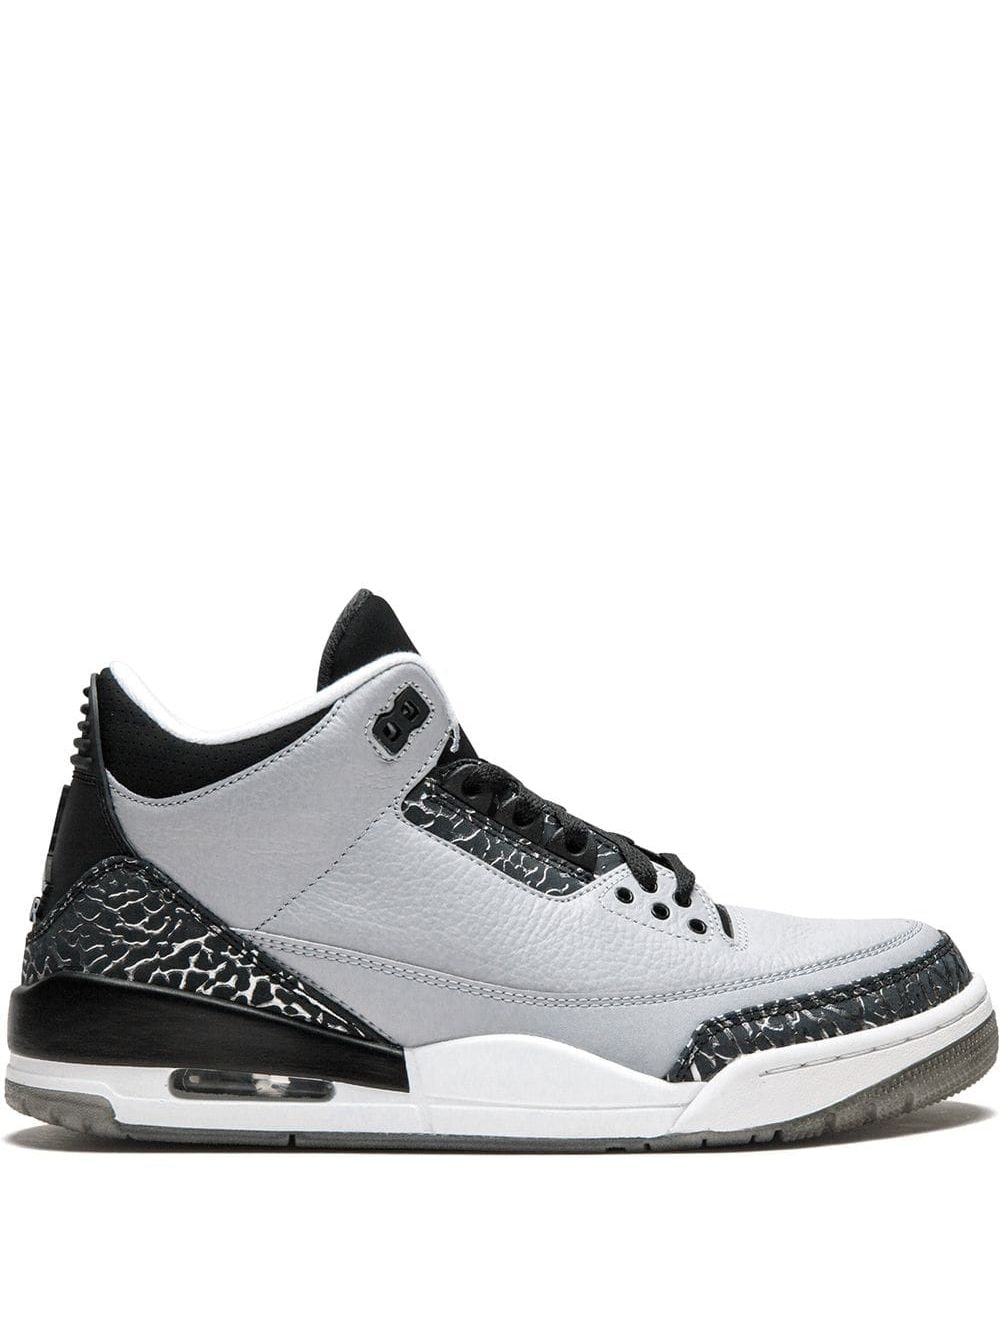 Jordan Air Jordan 3 Retro sneakers - Grey